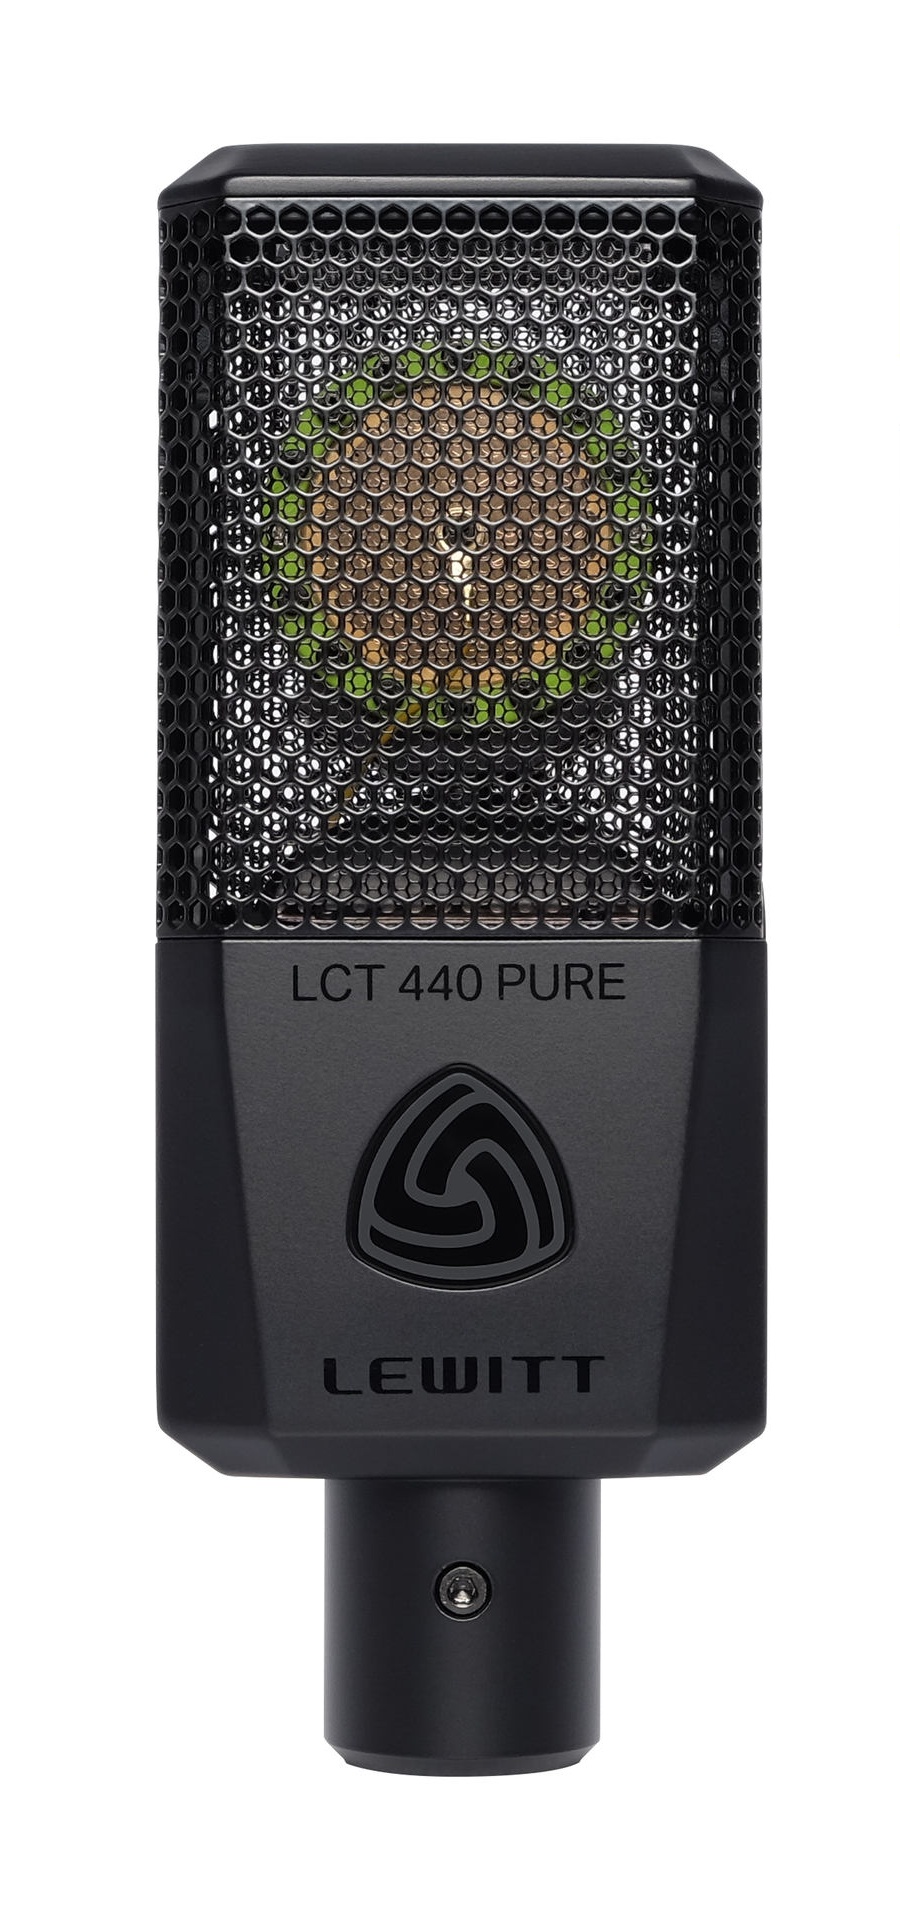 LEWITT LCT 440 PURE